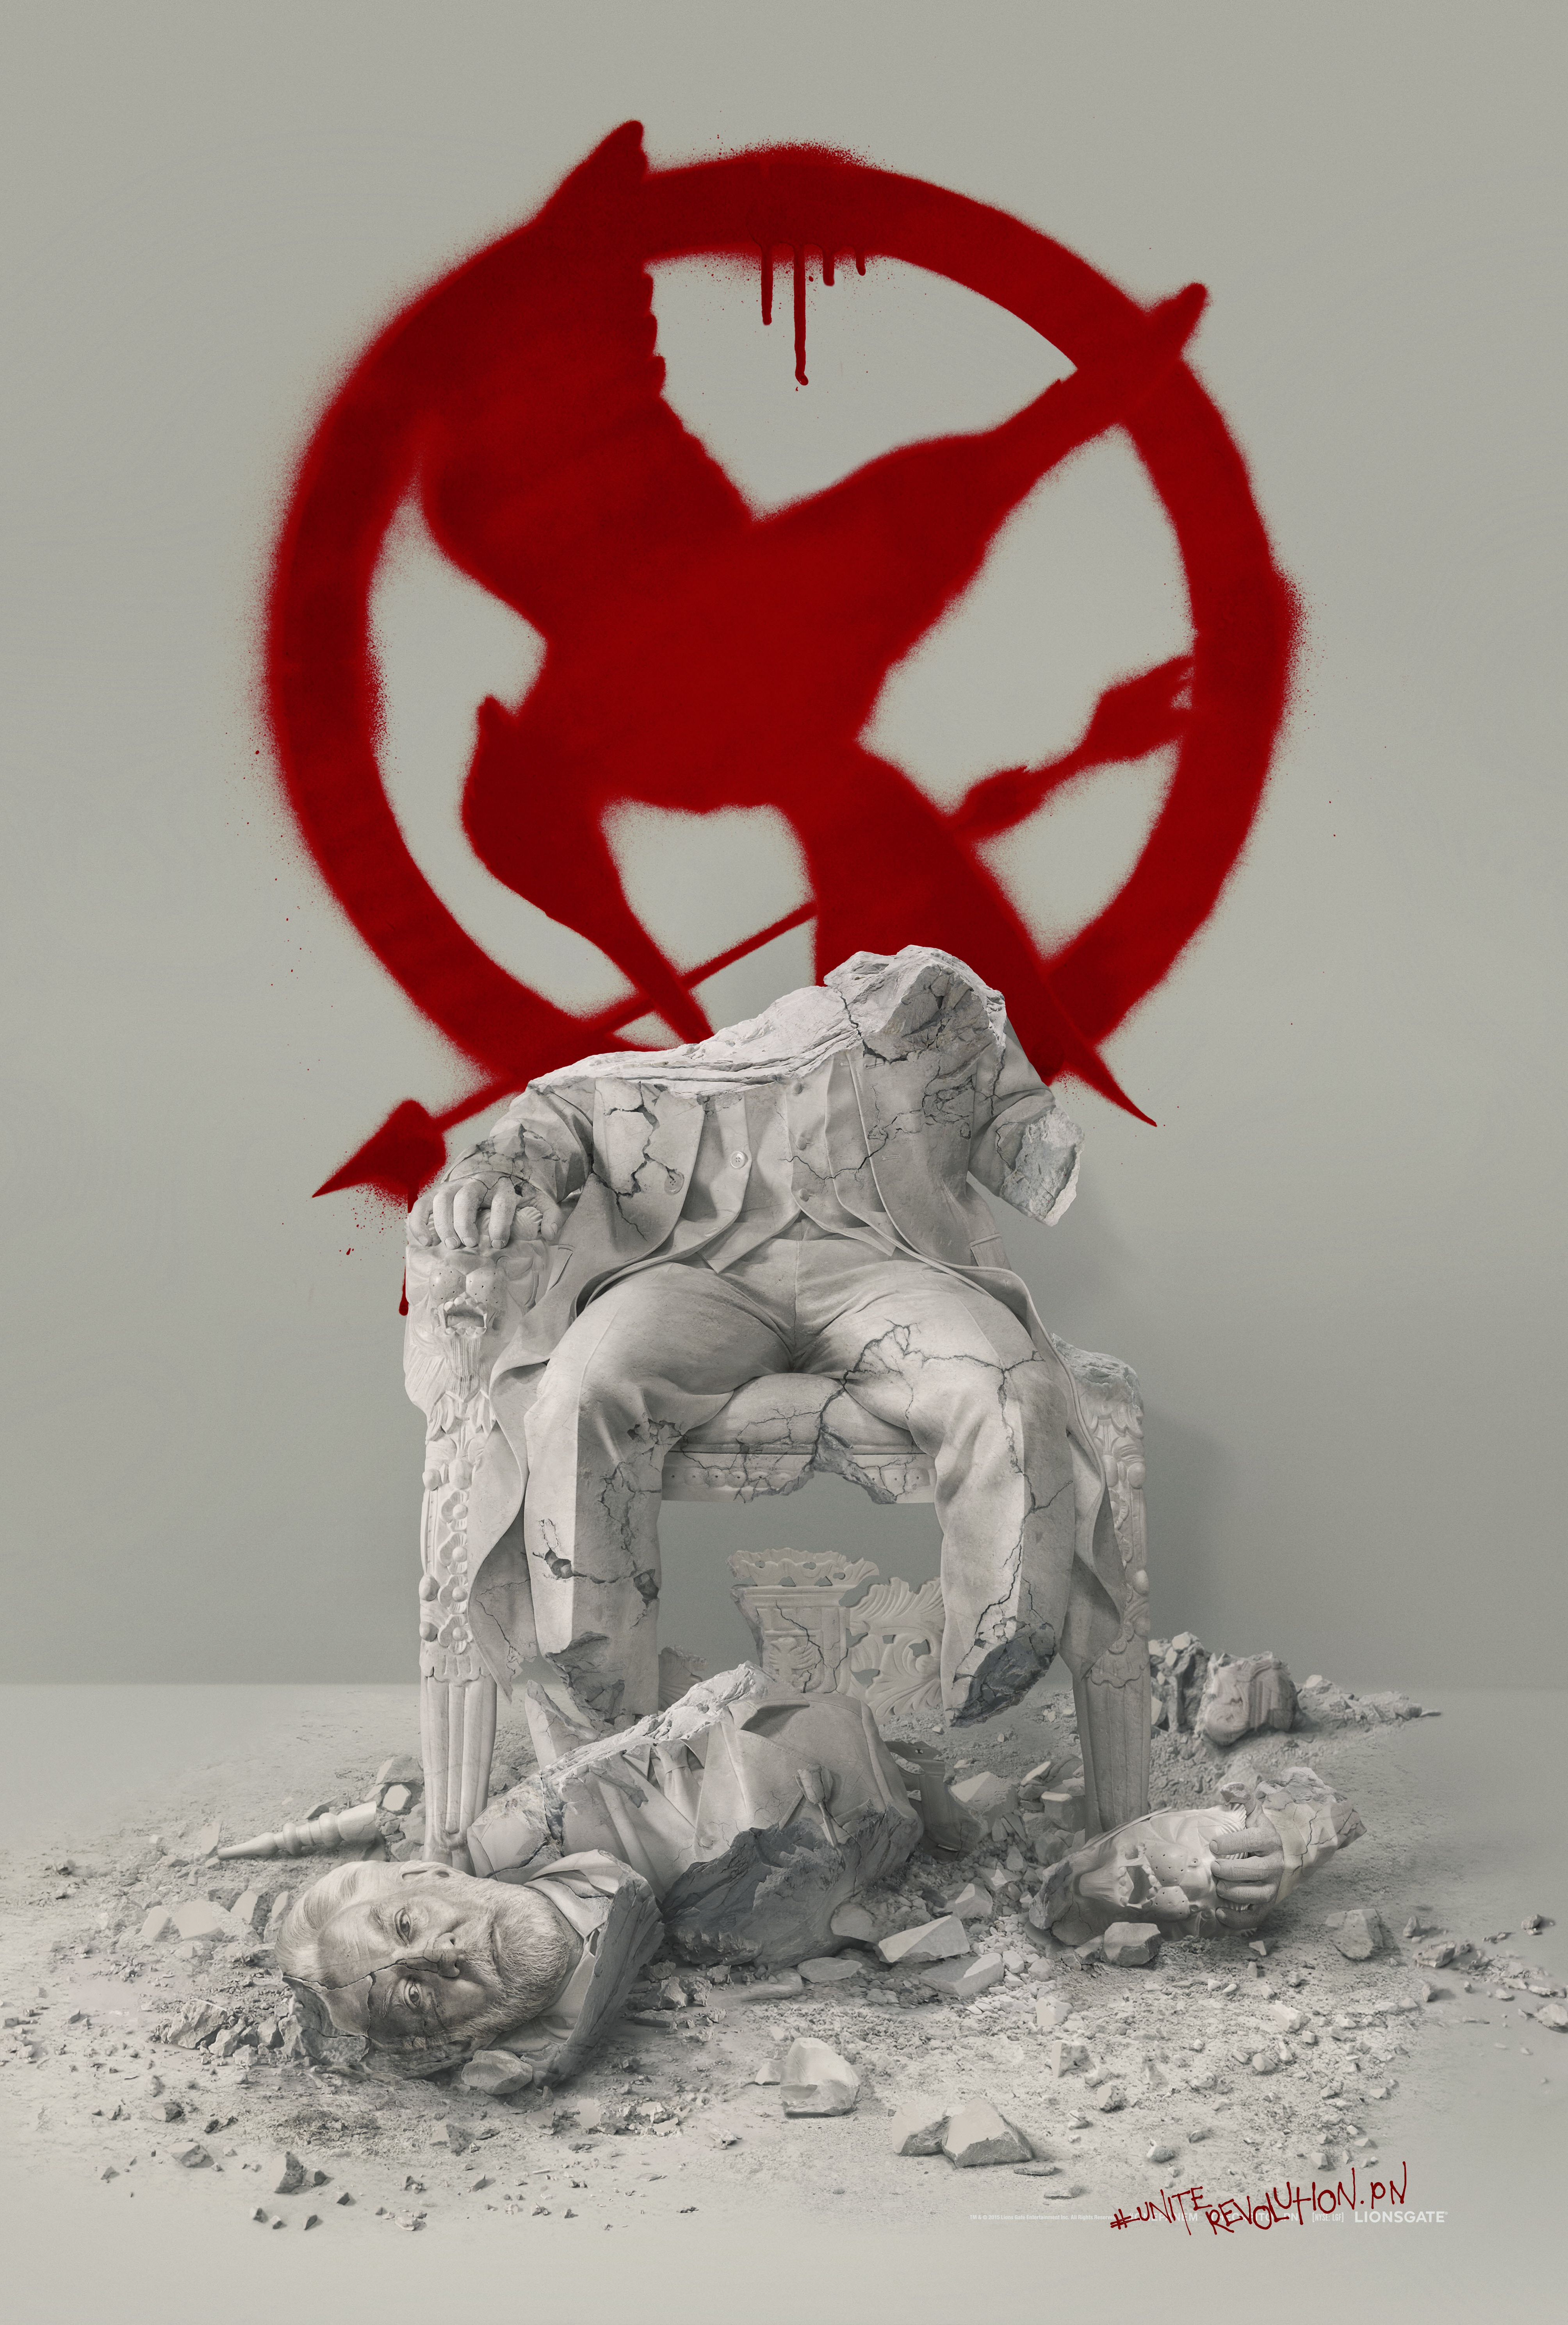 New Teaser Poster for 'The Hunger Games: Mockingjay (Part 2)'